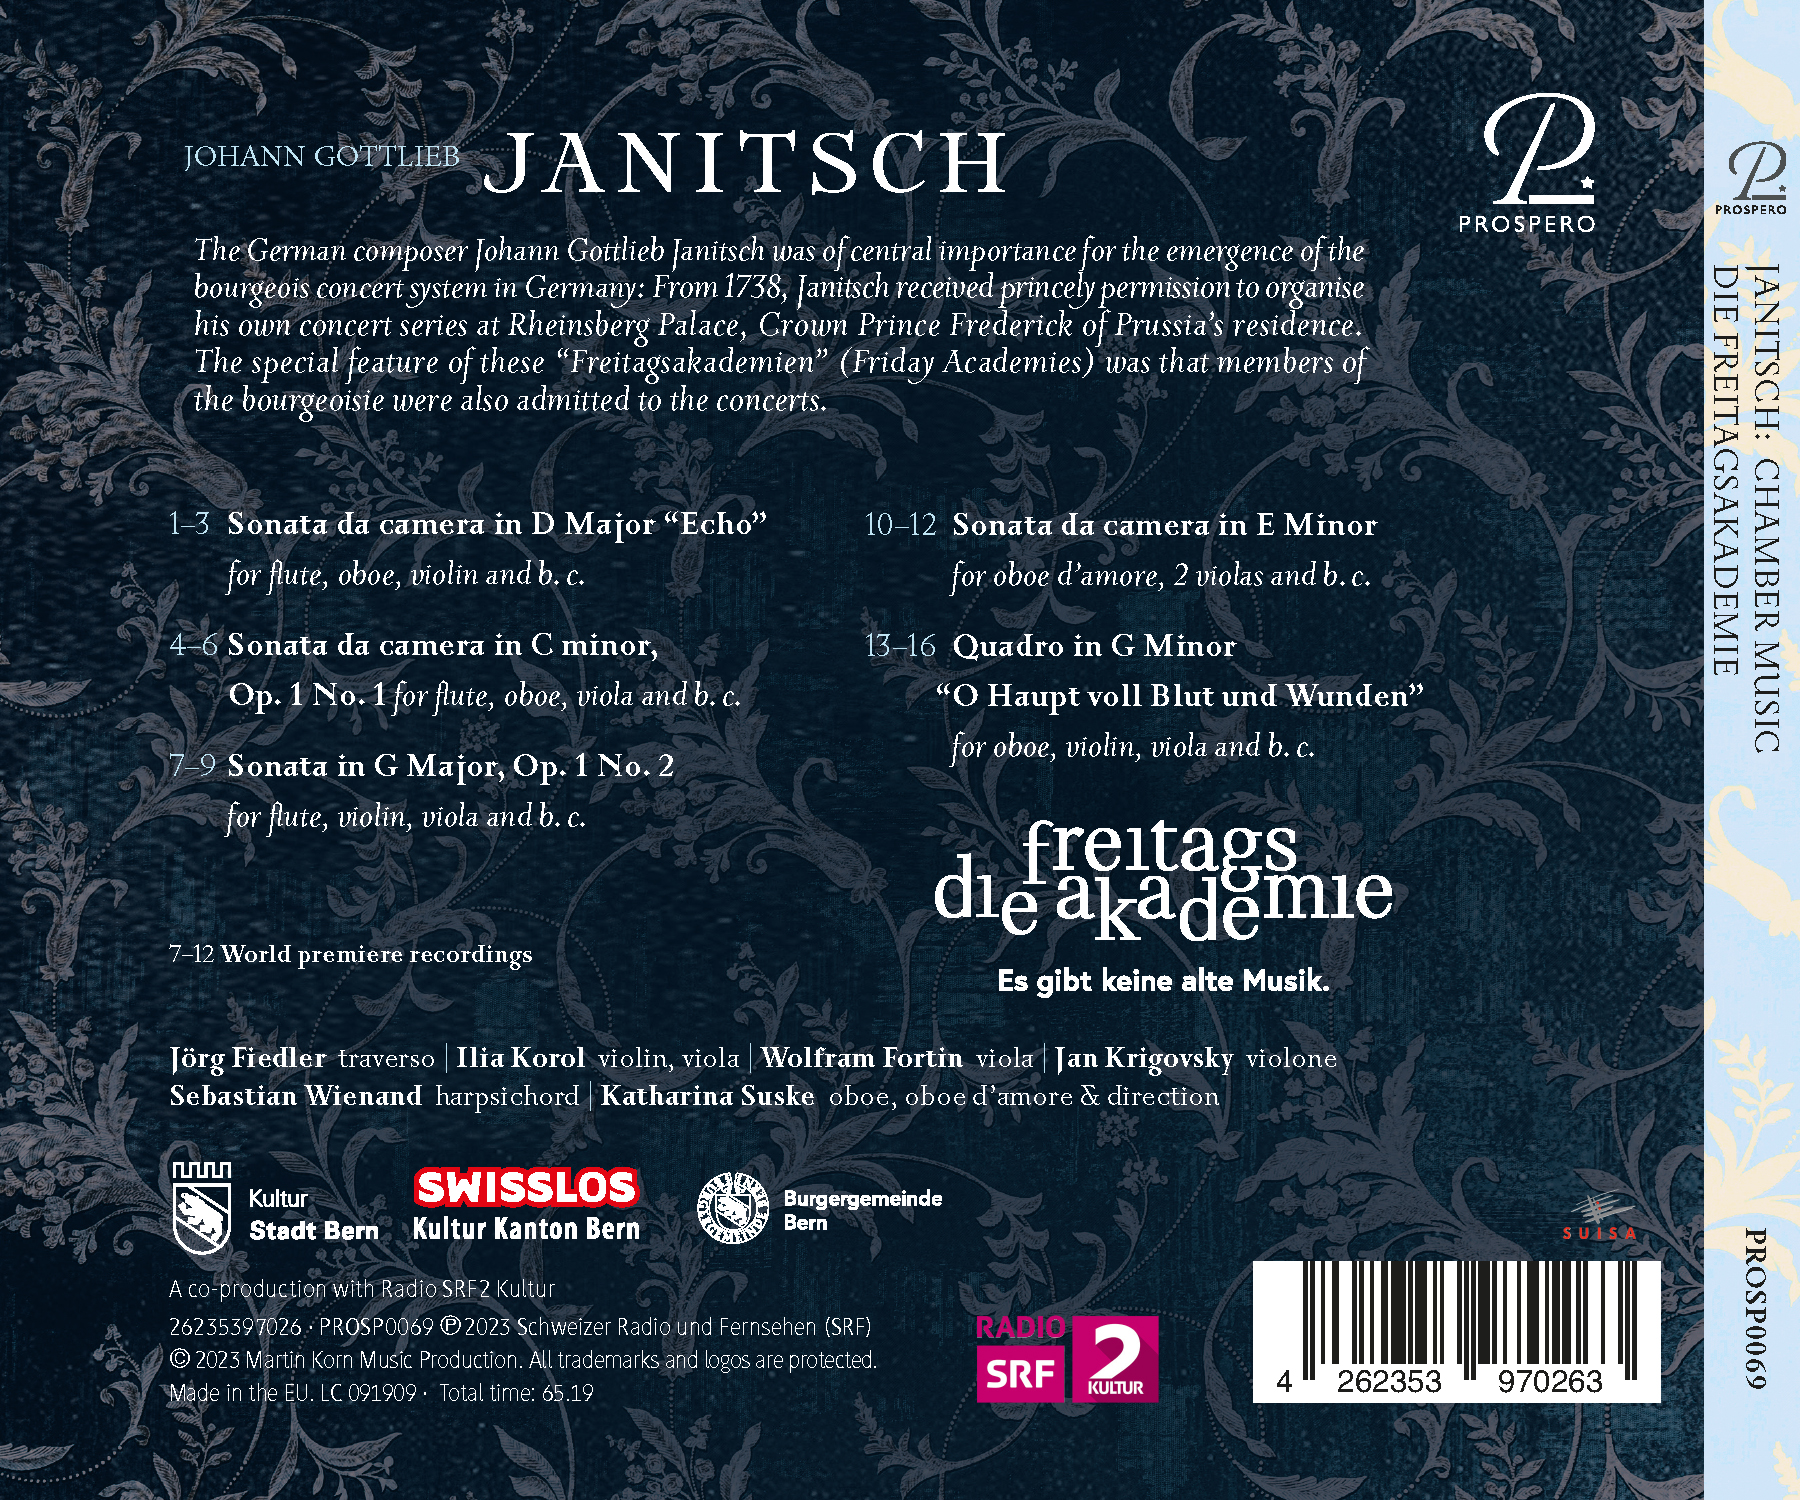 Freitagsakademie/Janitsch - Back Cover